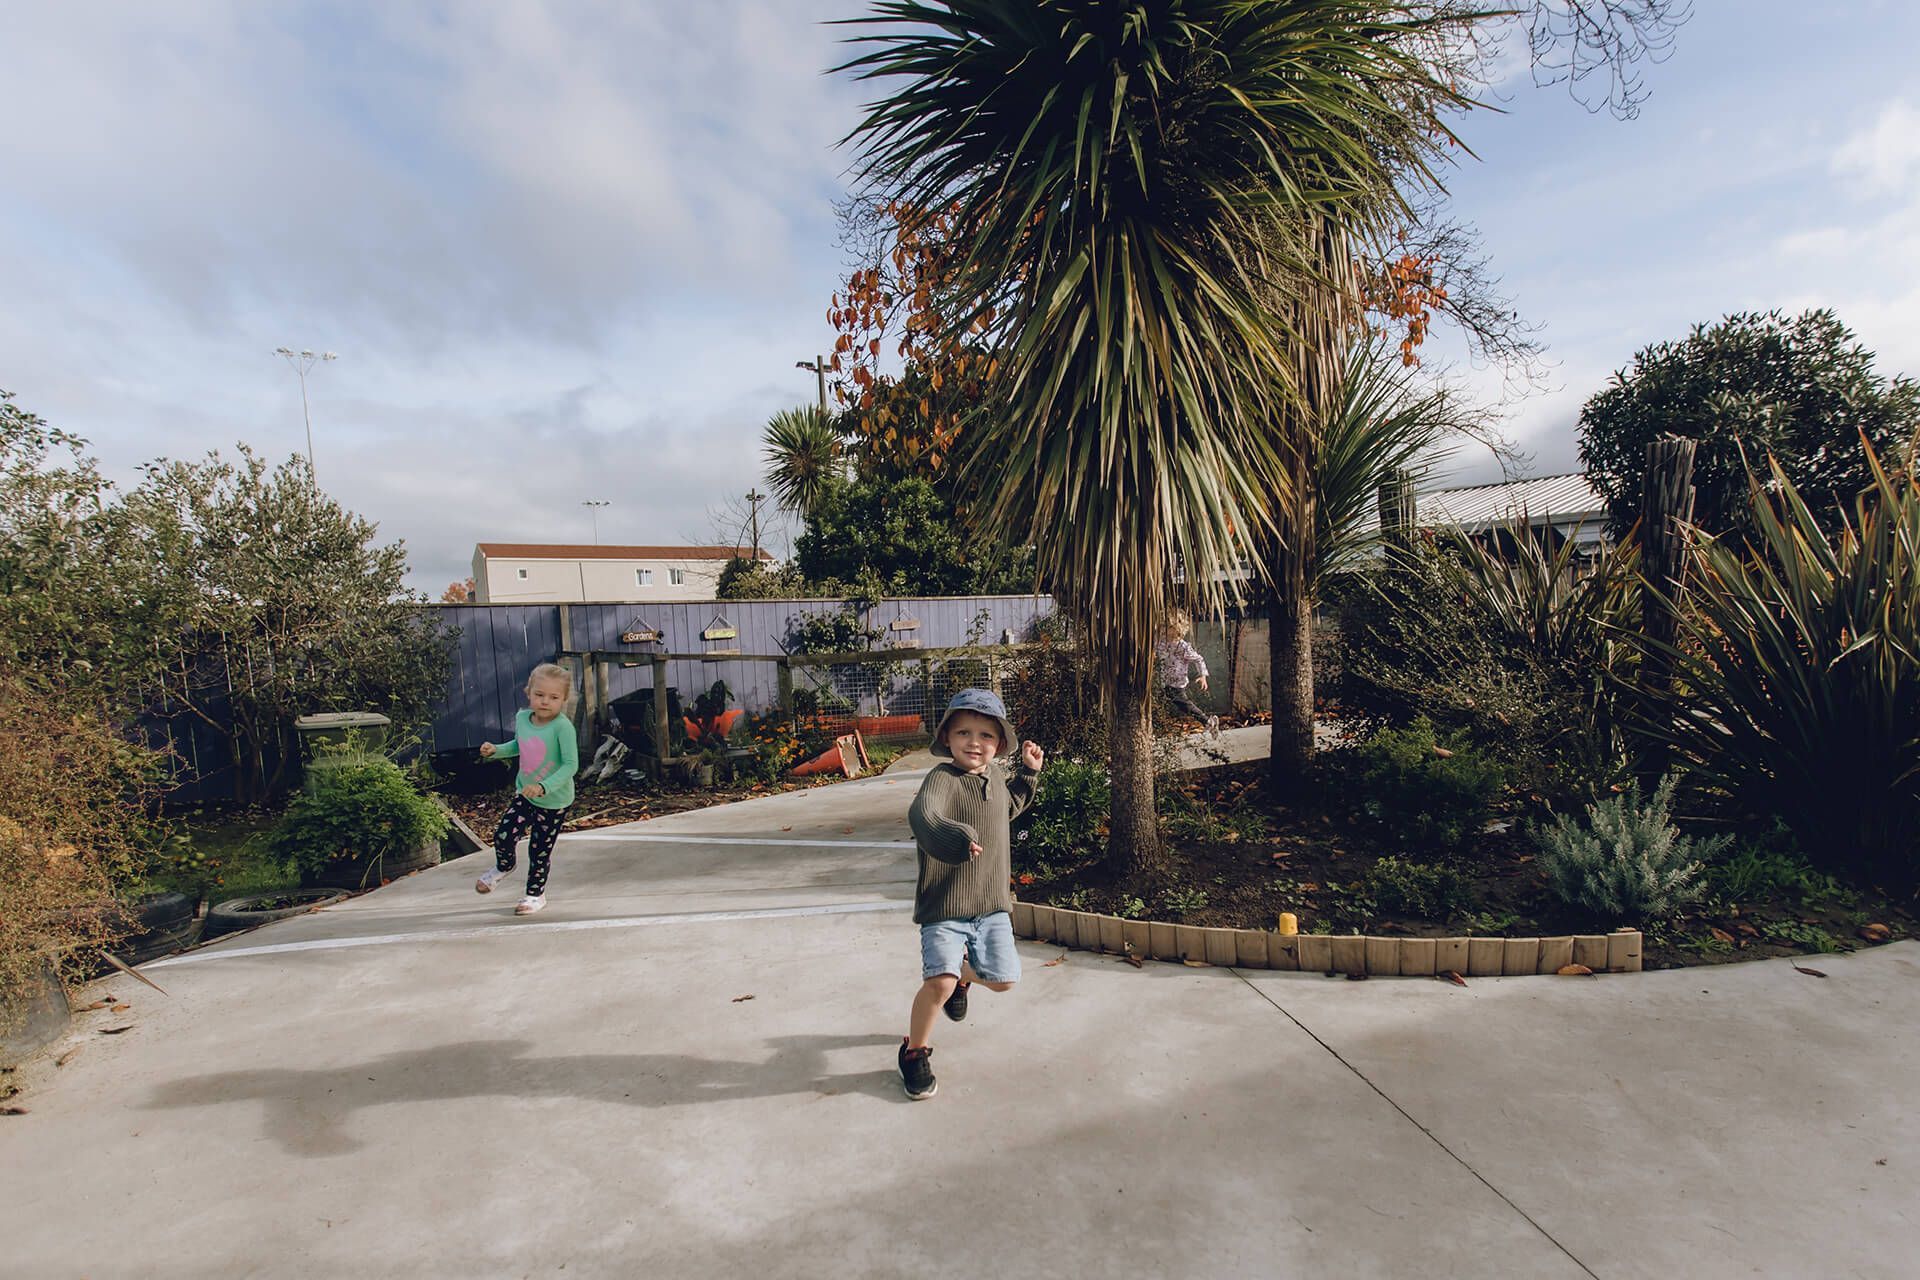 Seymour Kindergarten in Marlborough, New Zealand